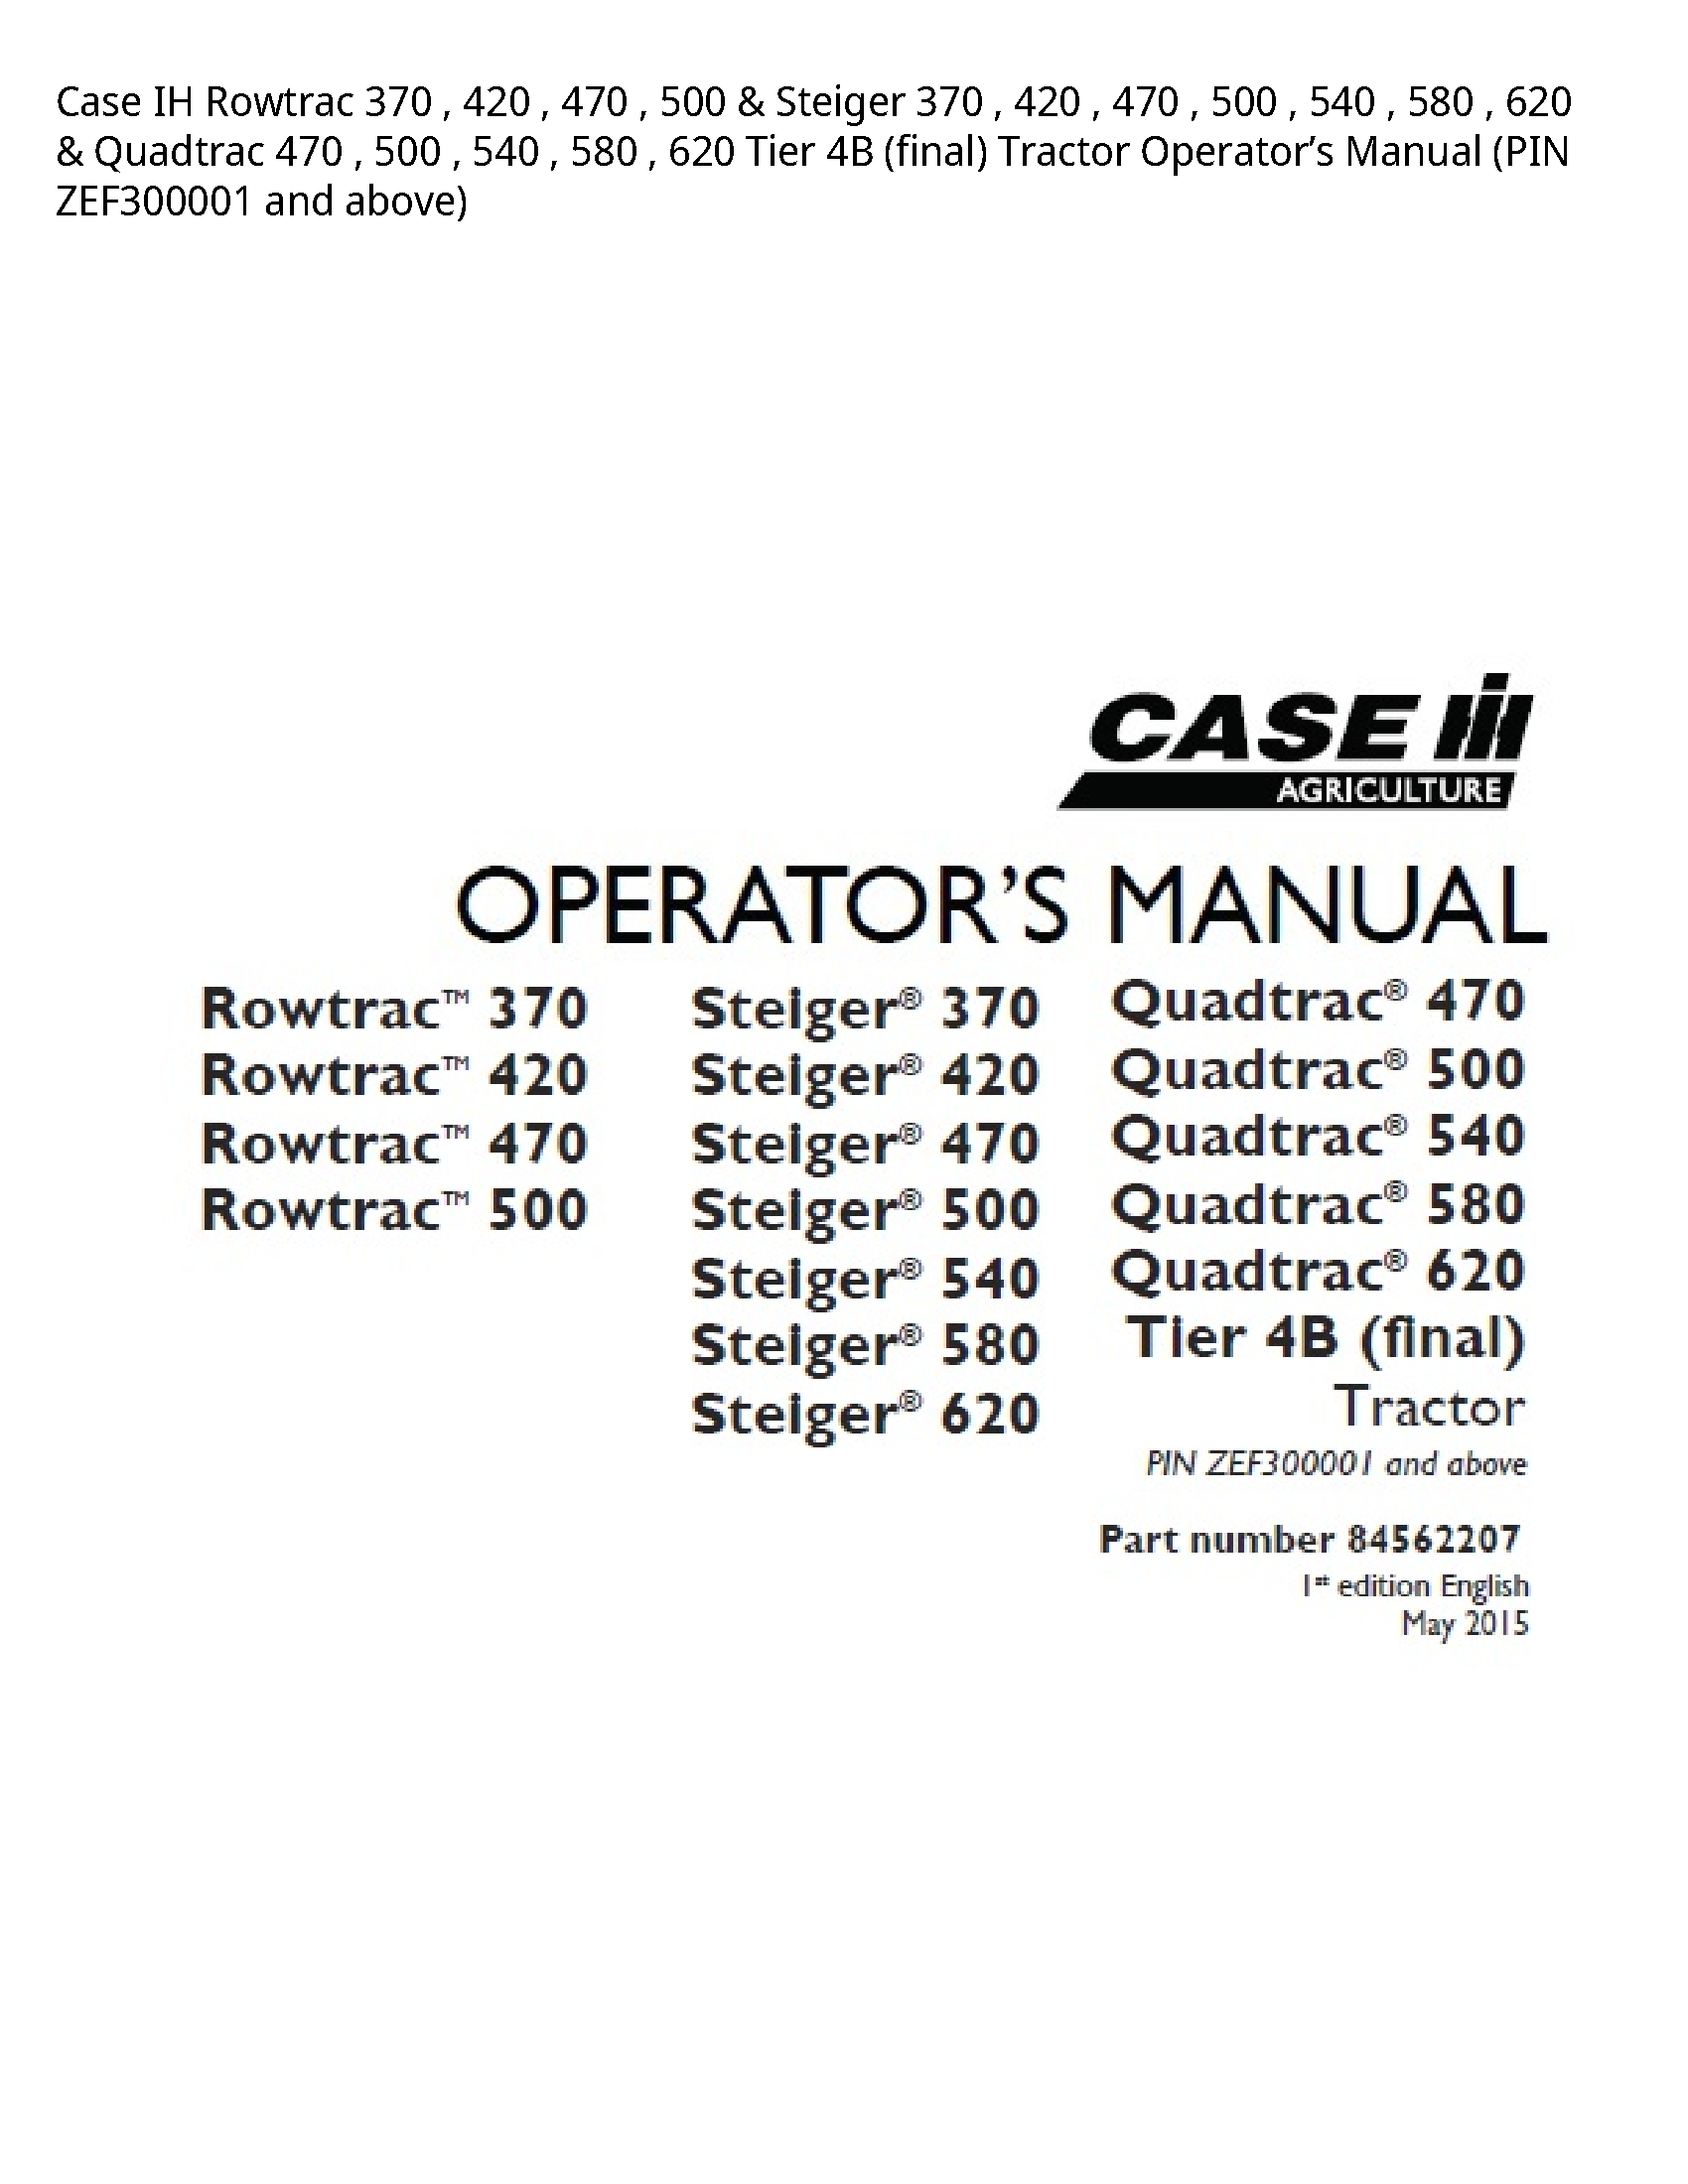 Case/Case IH 370 IH Rowtrac Steiger Quadtrac Tier (final) Tractor Operator’s manual